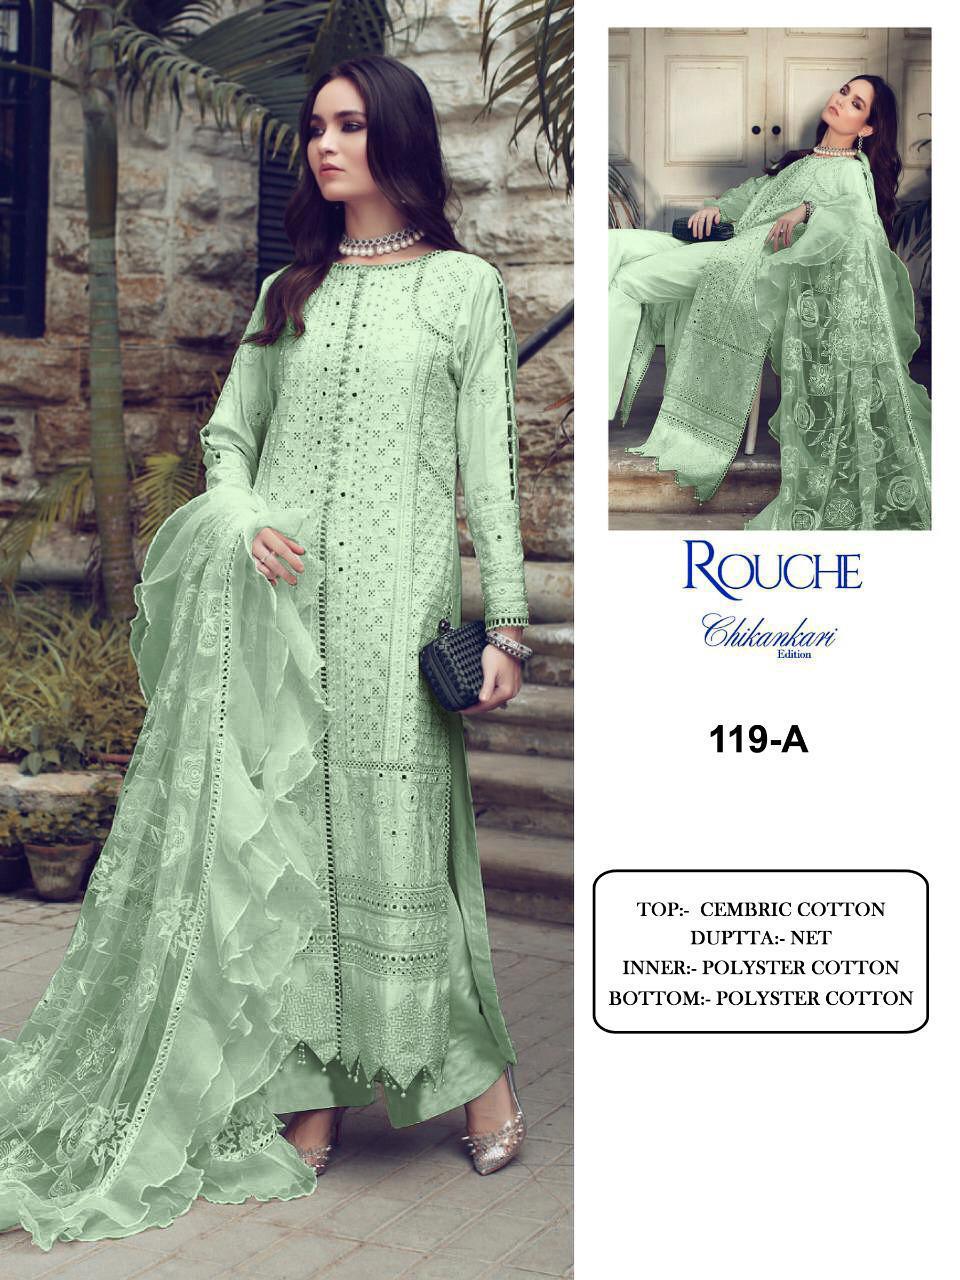 Pakistani Suits Rouche Chikankari Edition KF 119-A